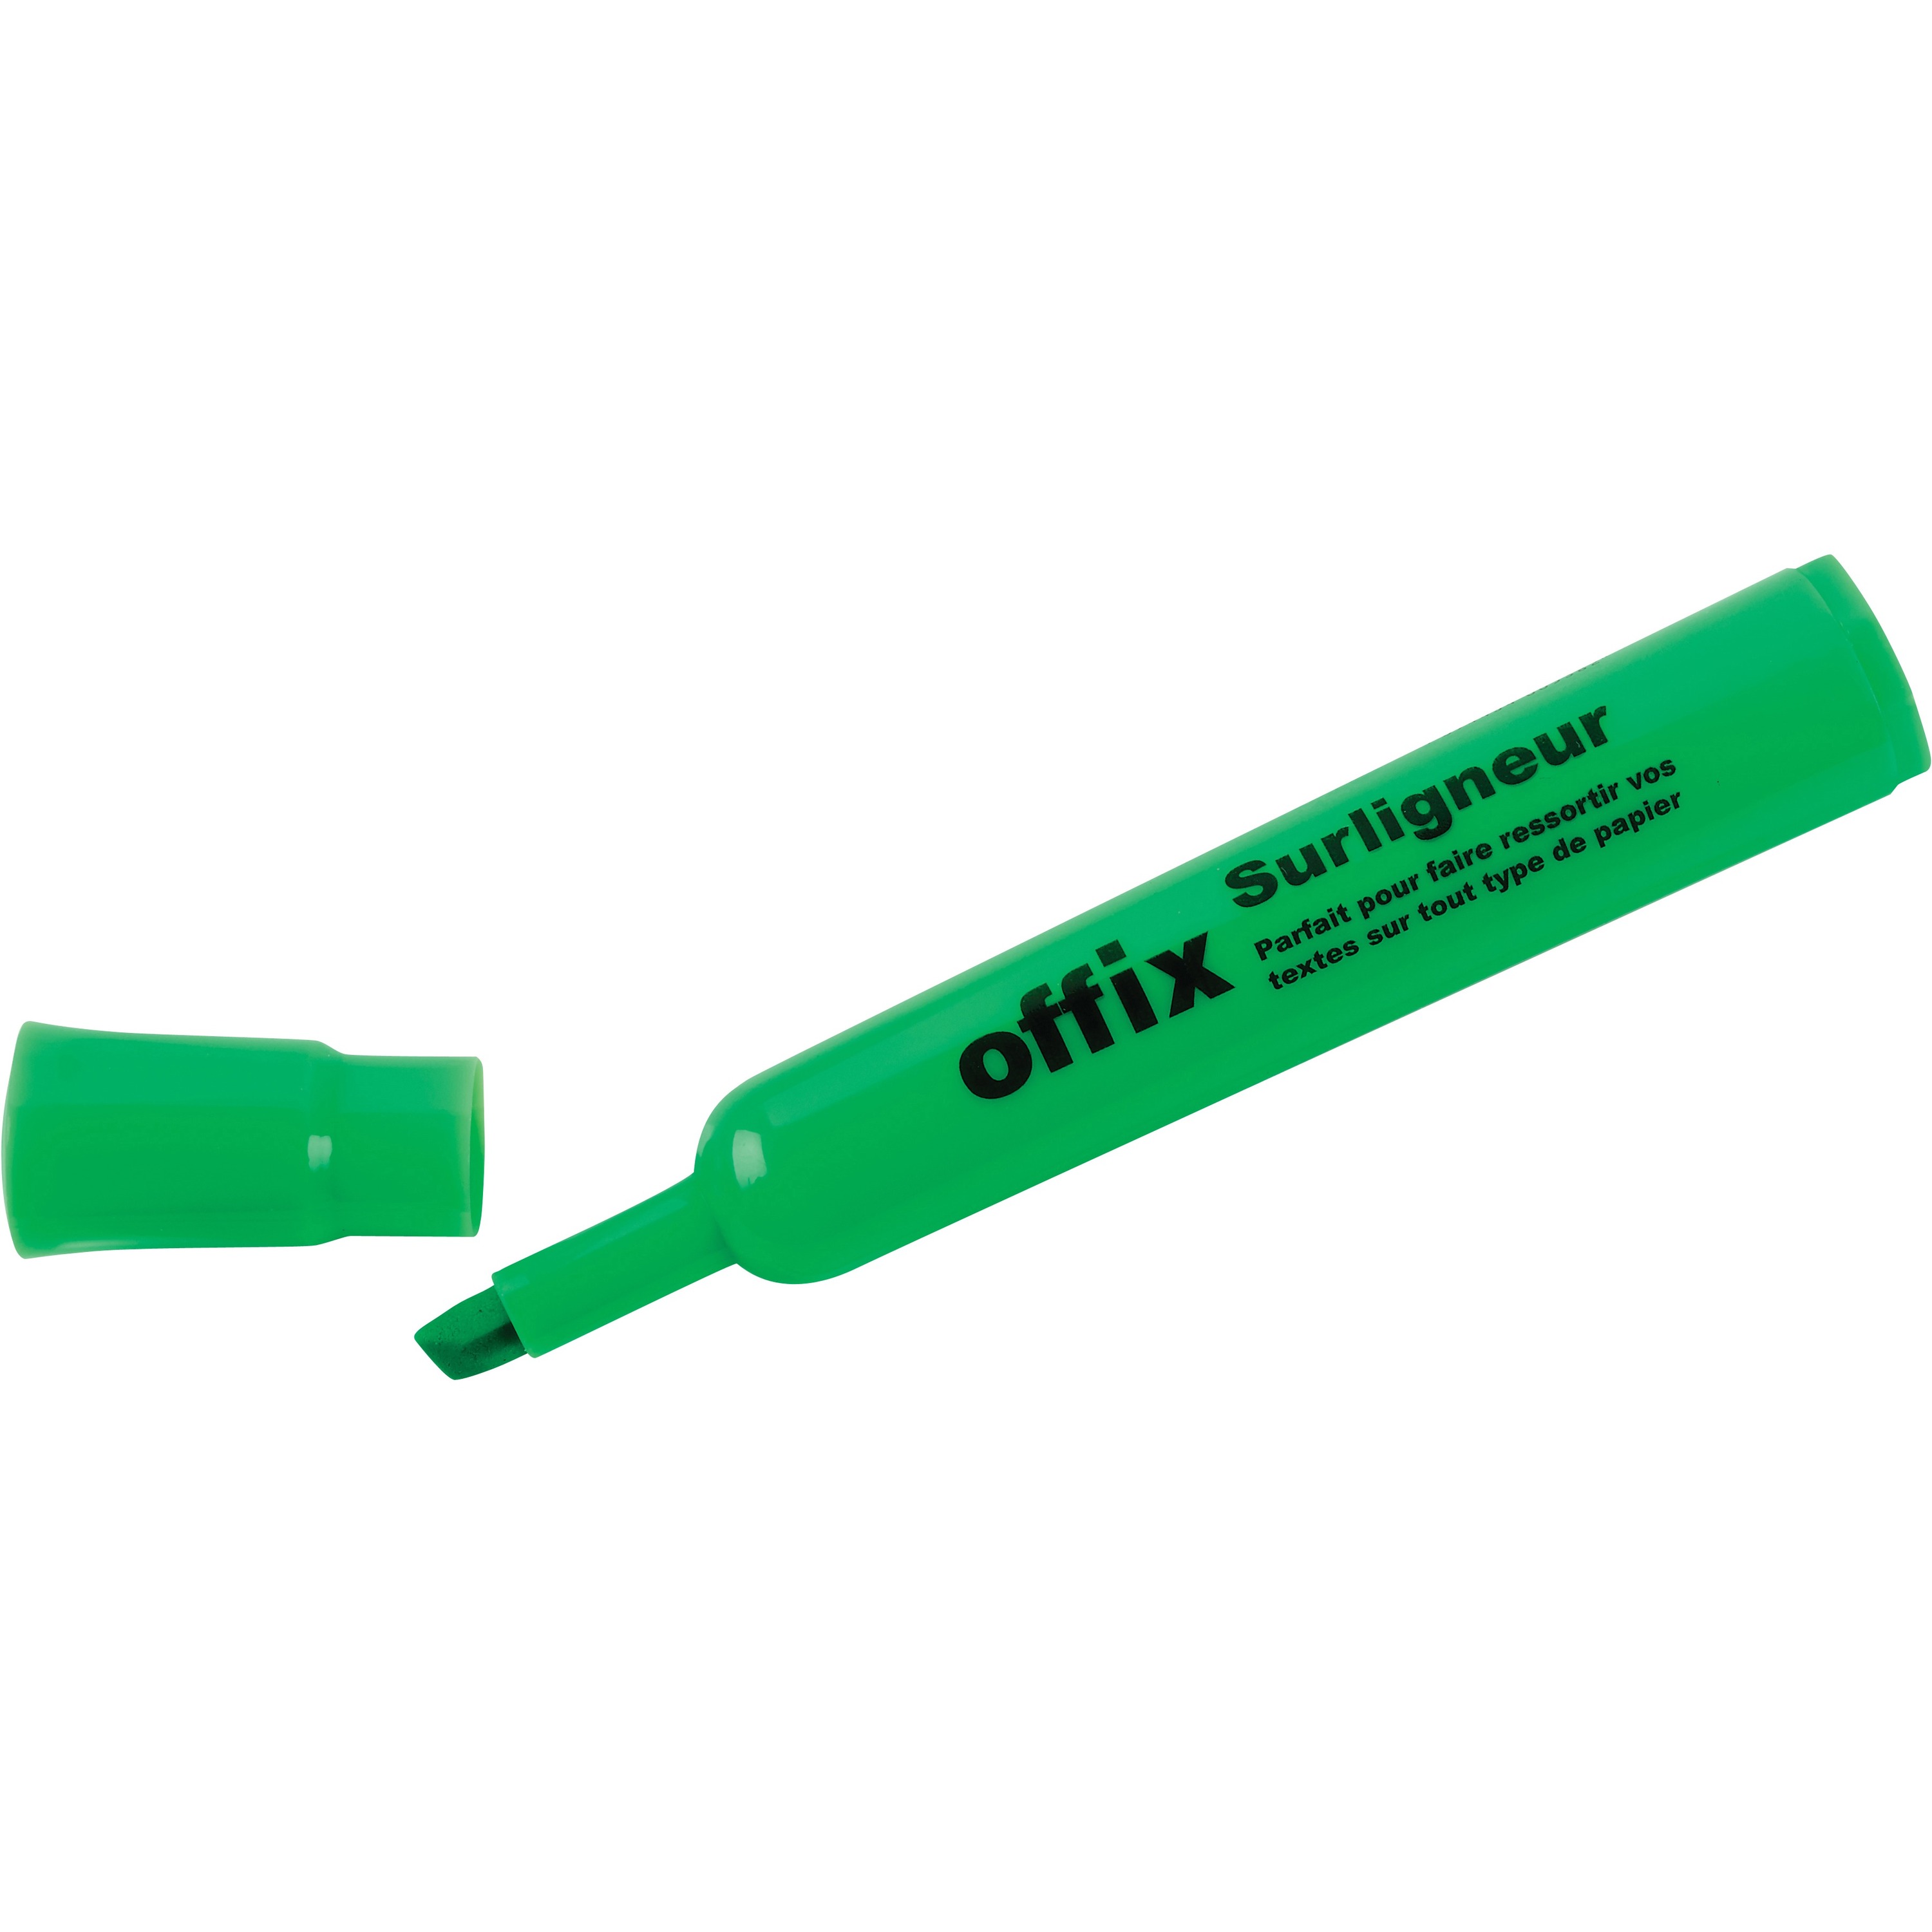 Offix Highlighter - Chisel Marker Point Style - Green - 1 Dozen